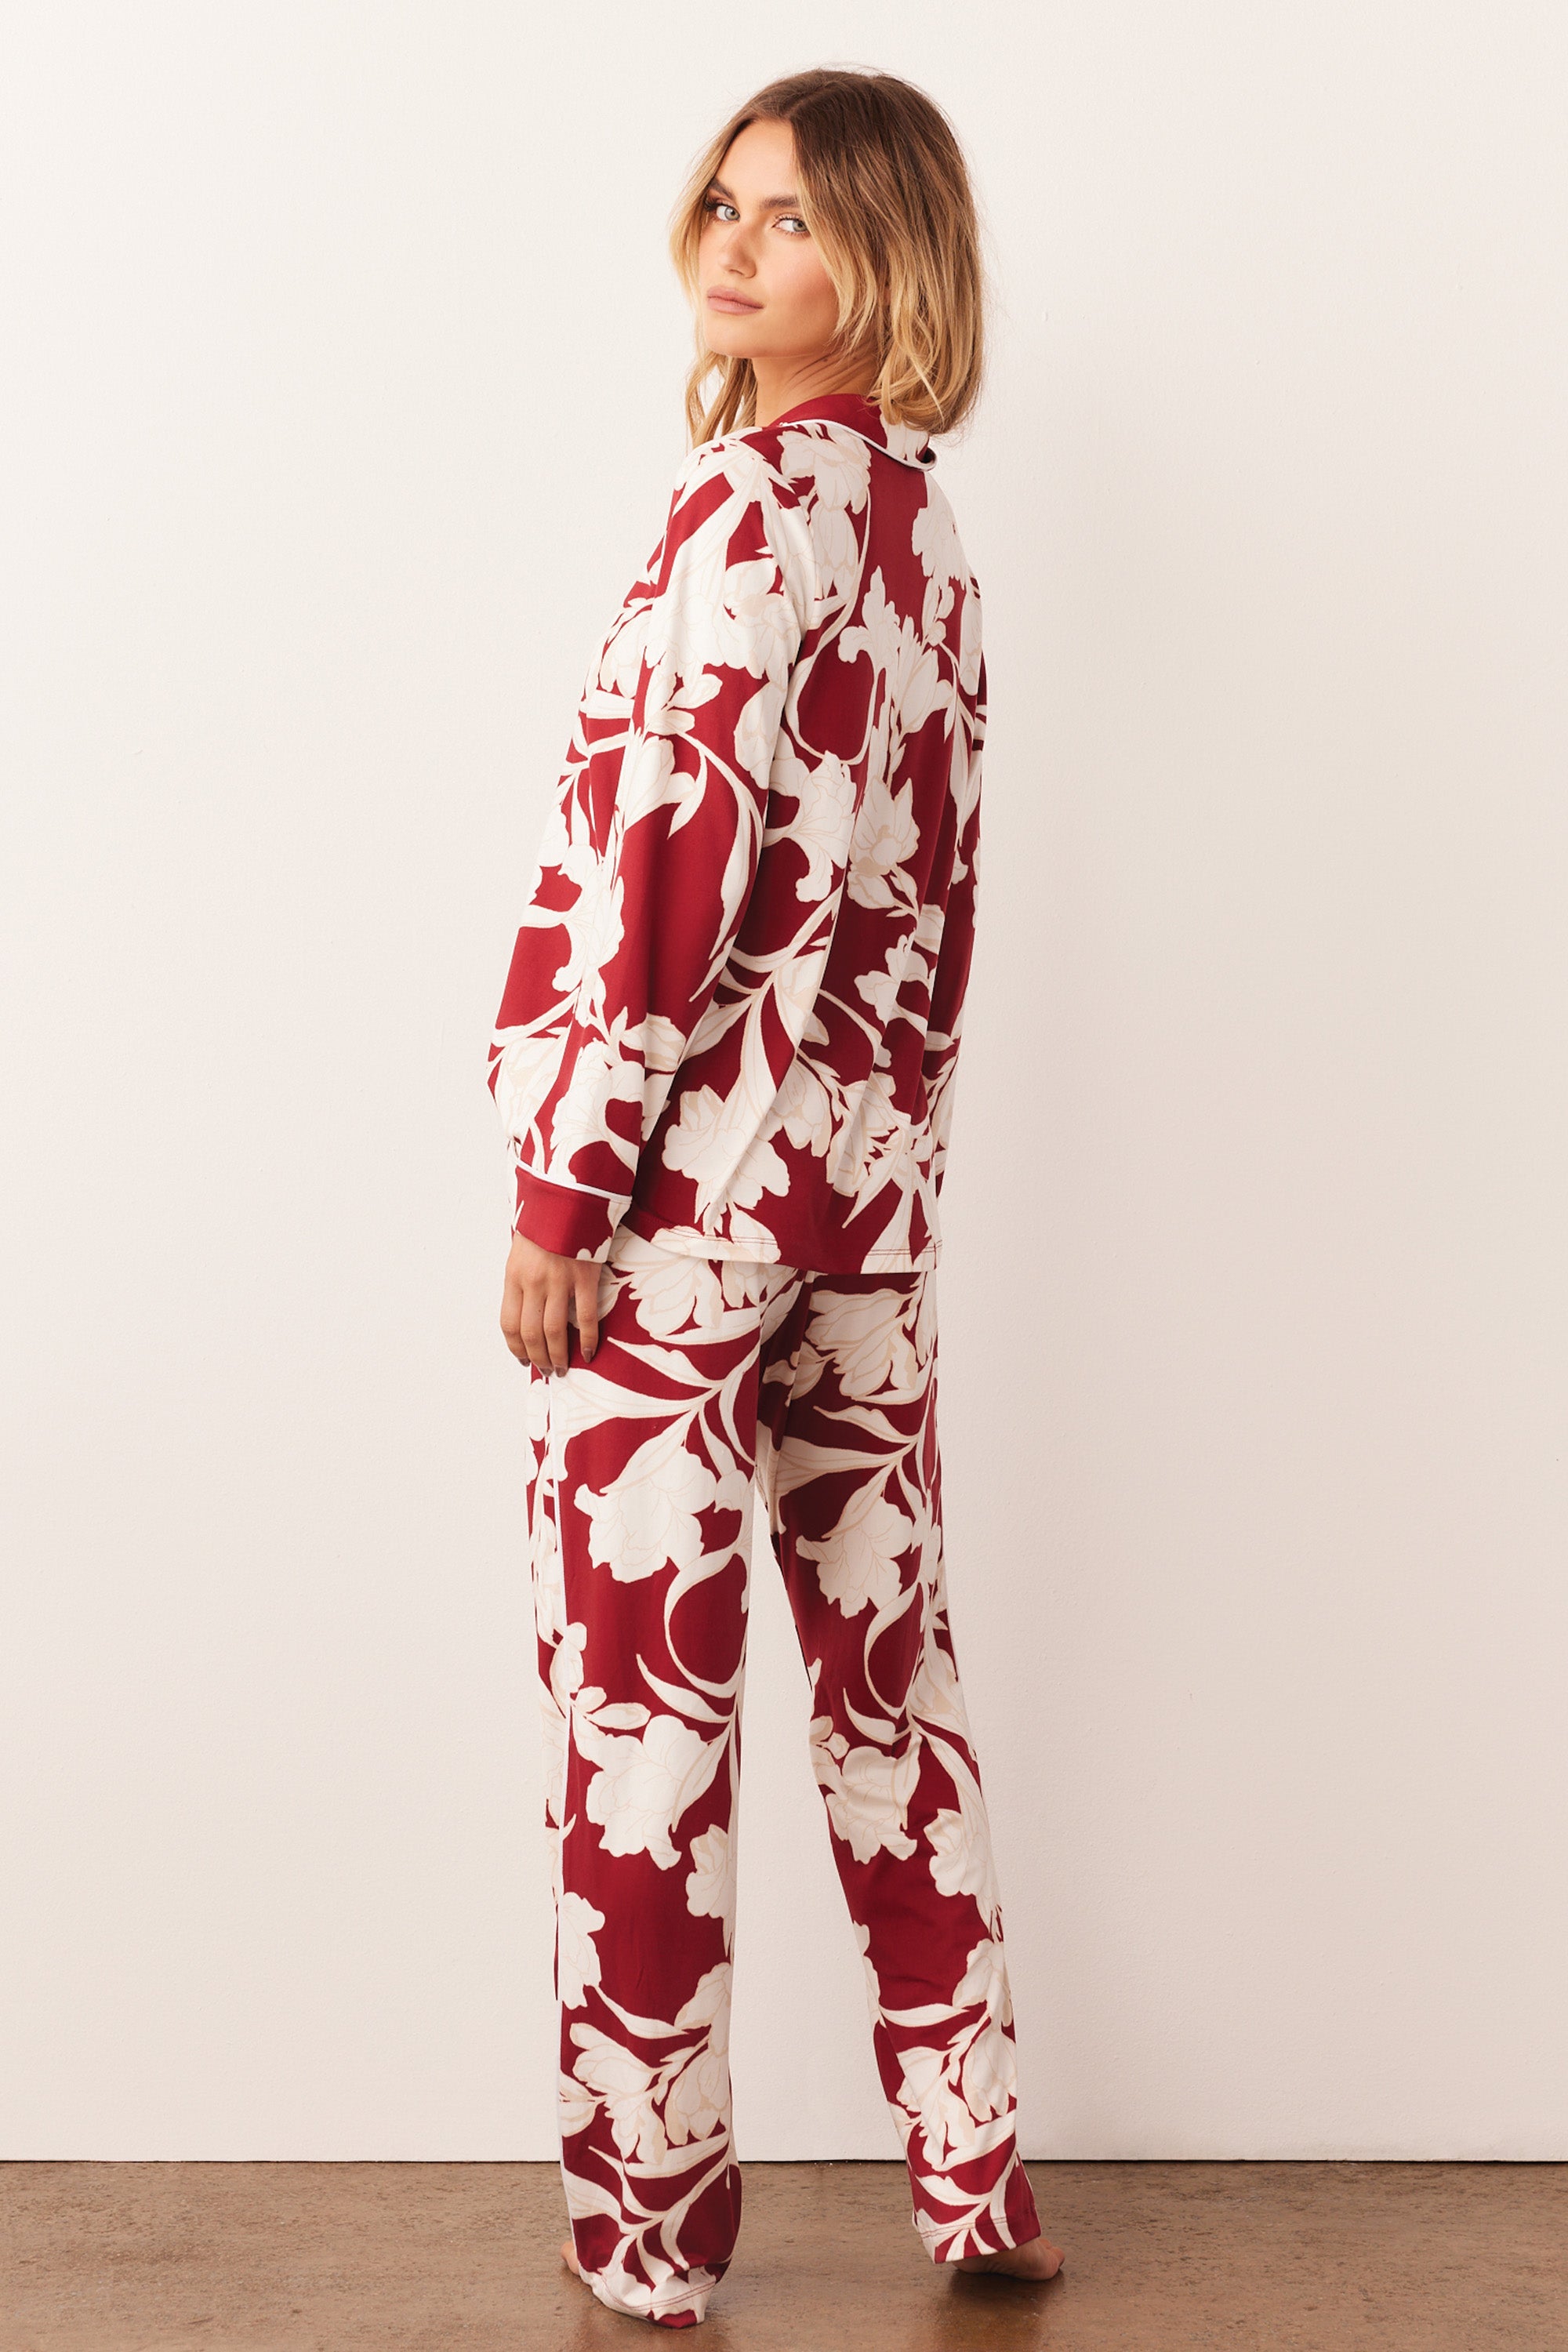 ADR Women's Floral Print Pajamas with Pockets, Button Down PJ Set Blue  White Floral X Large